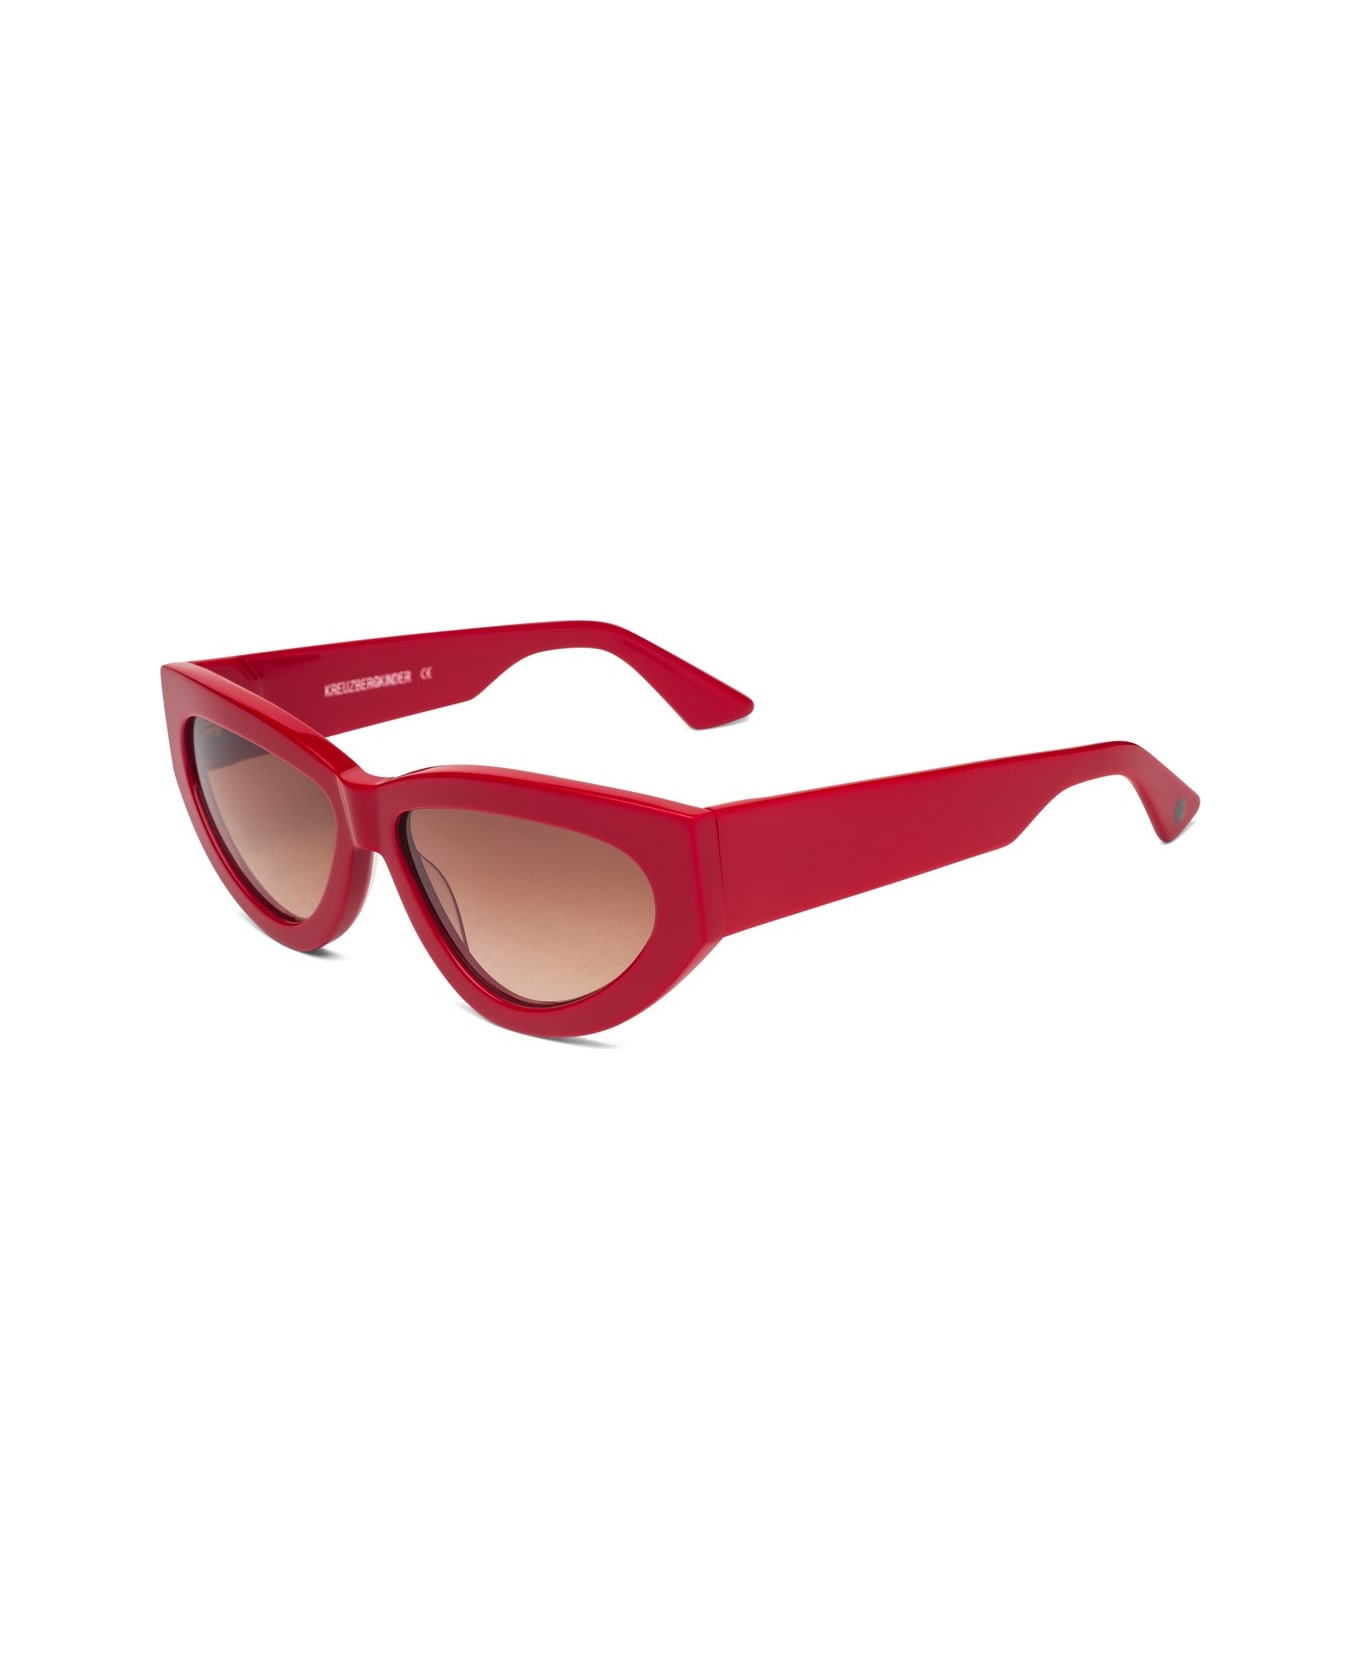 Kreuzbergkinder Jessy Sunglasses - Rosso サングラス